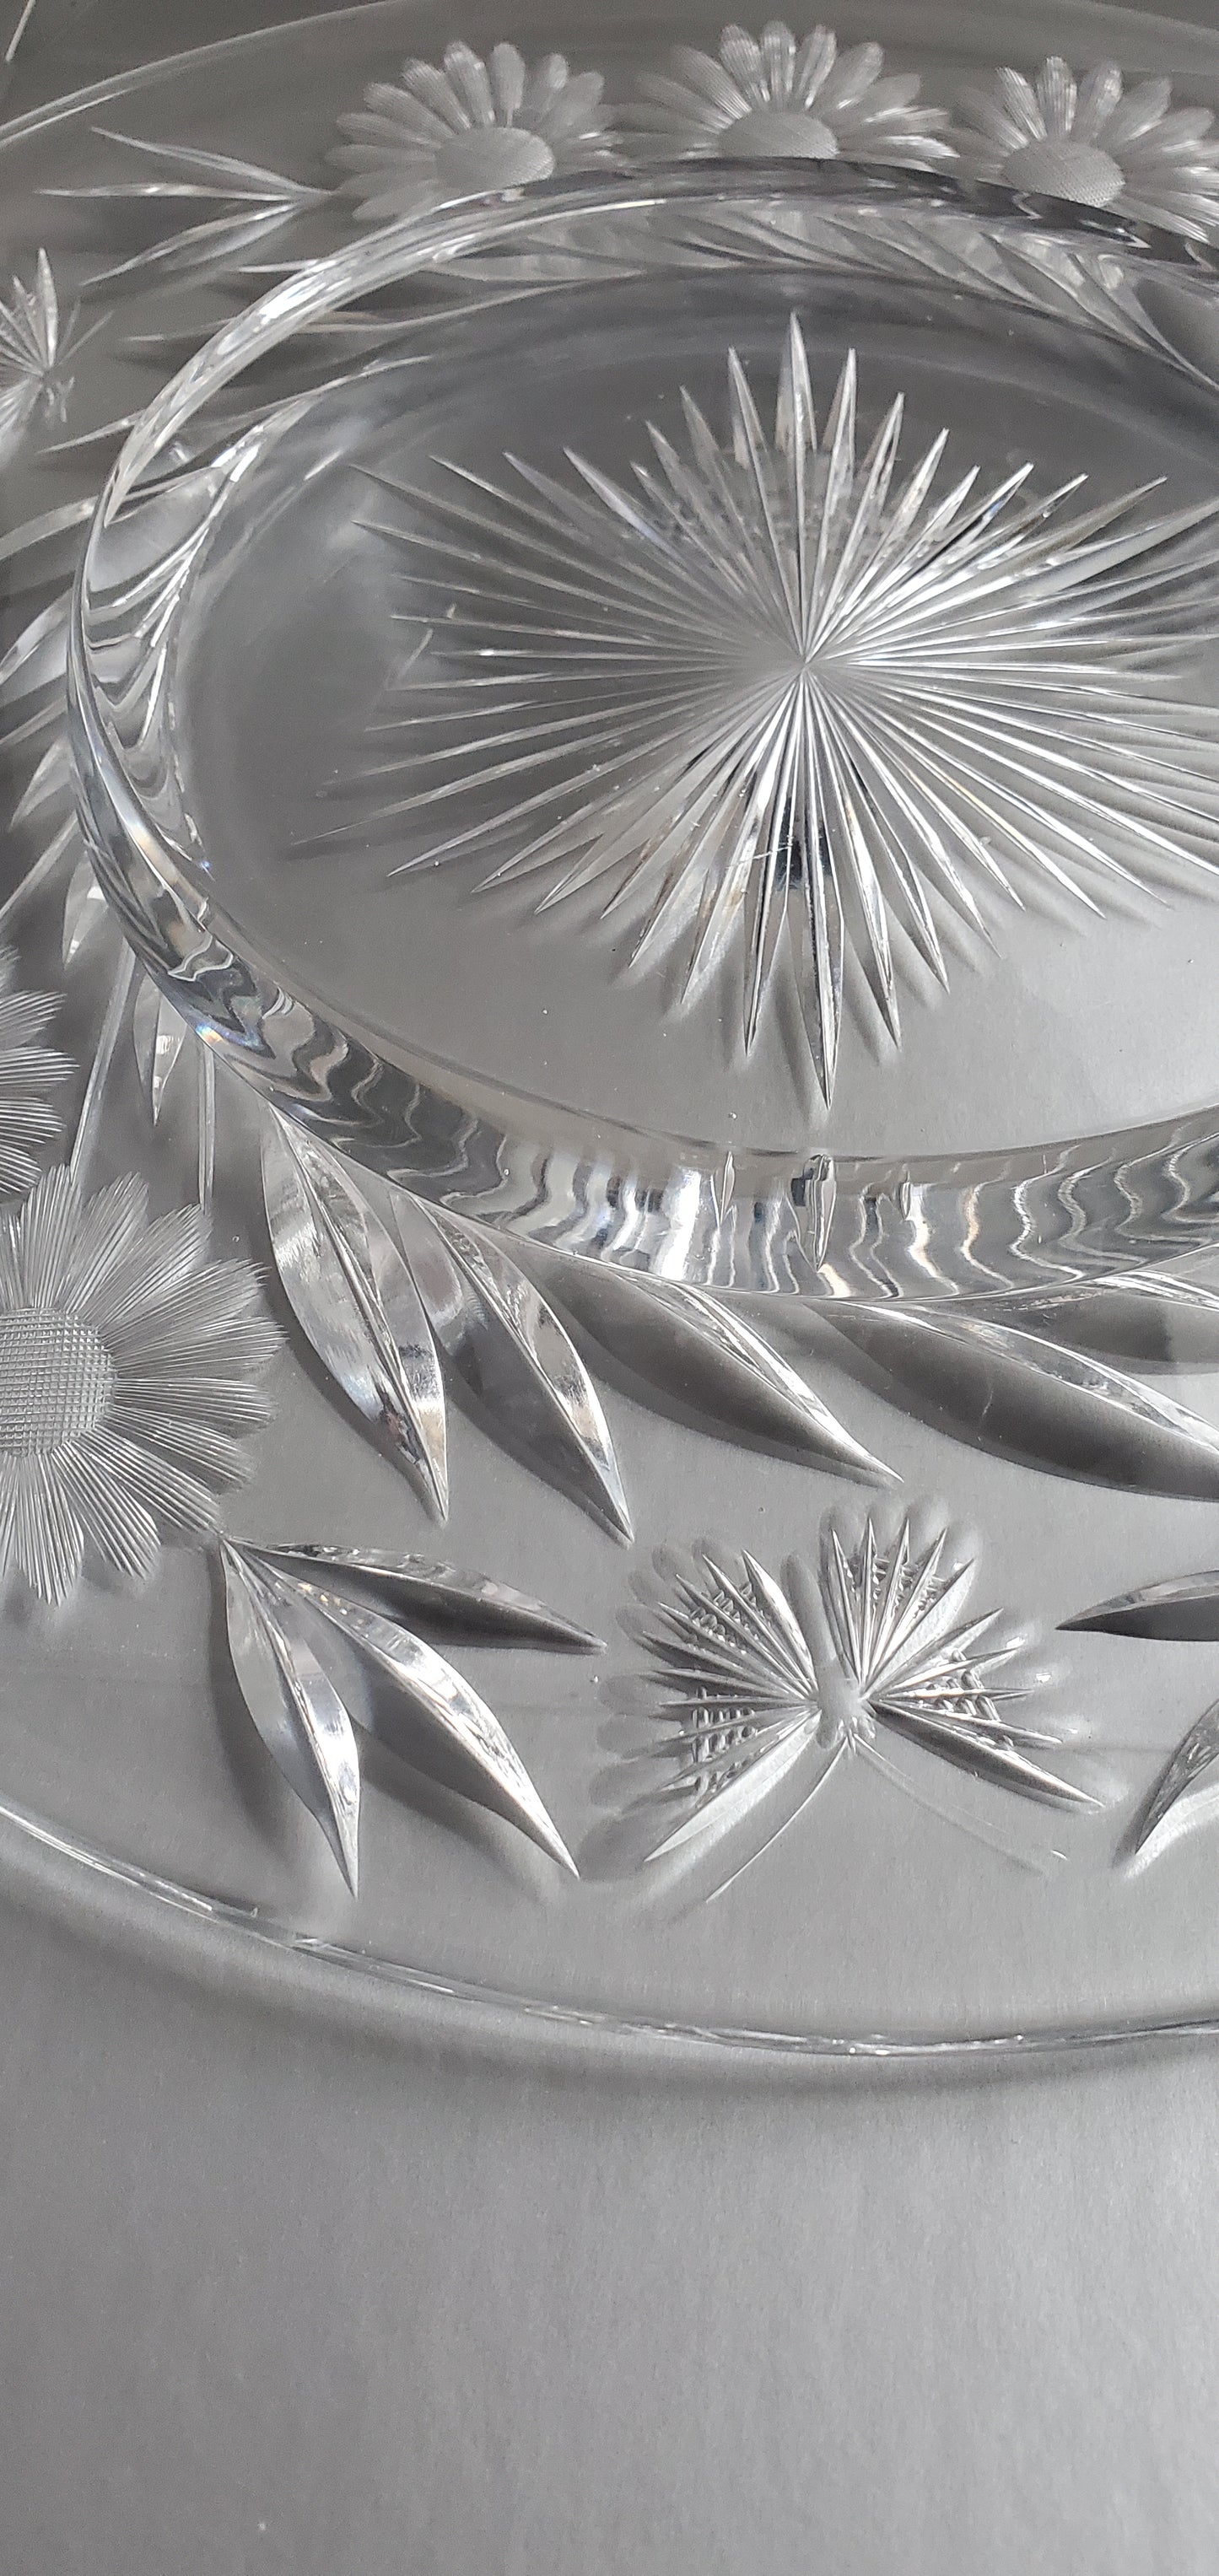 ABP crystal platter hand cut glass butterfly